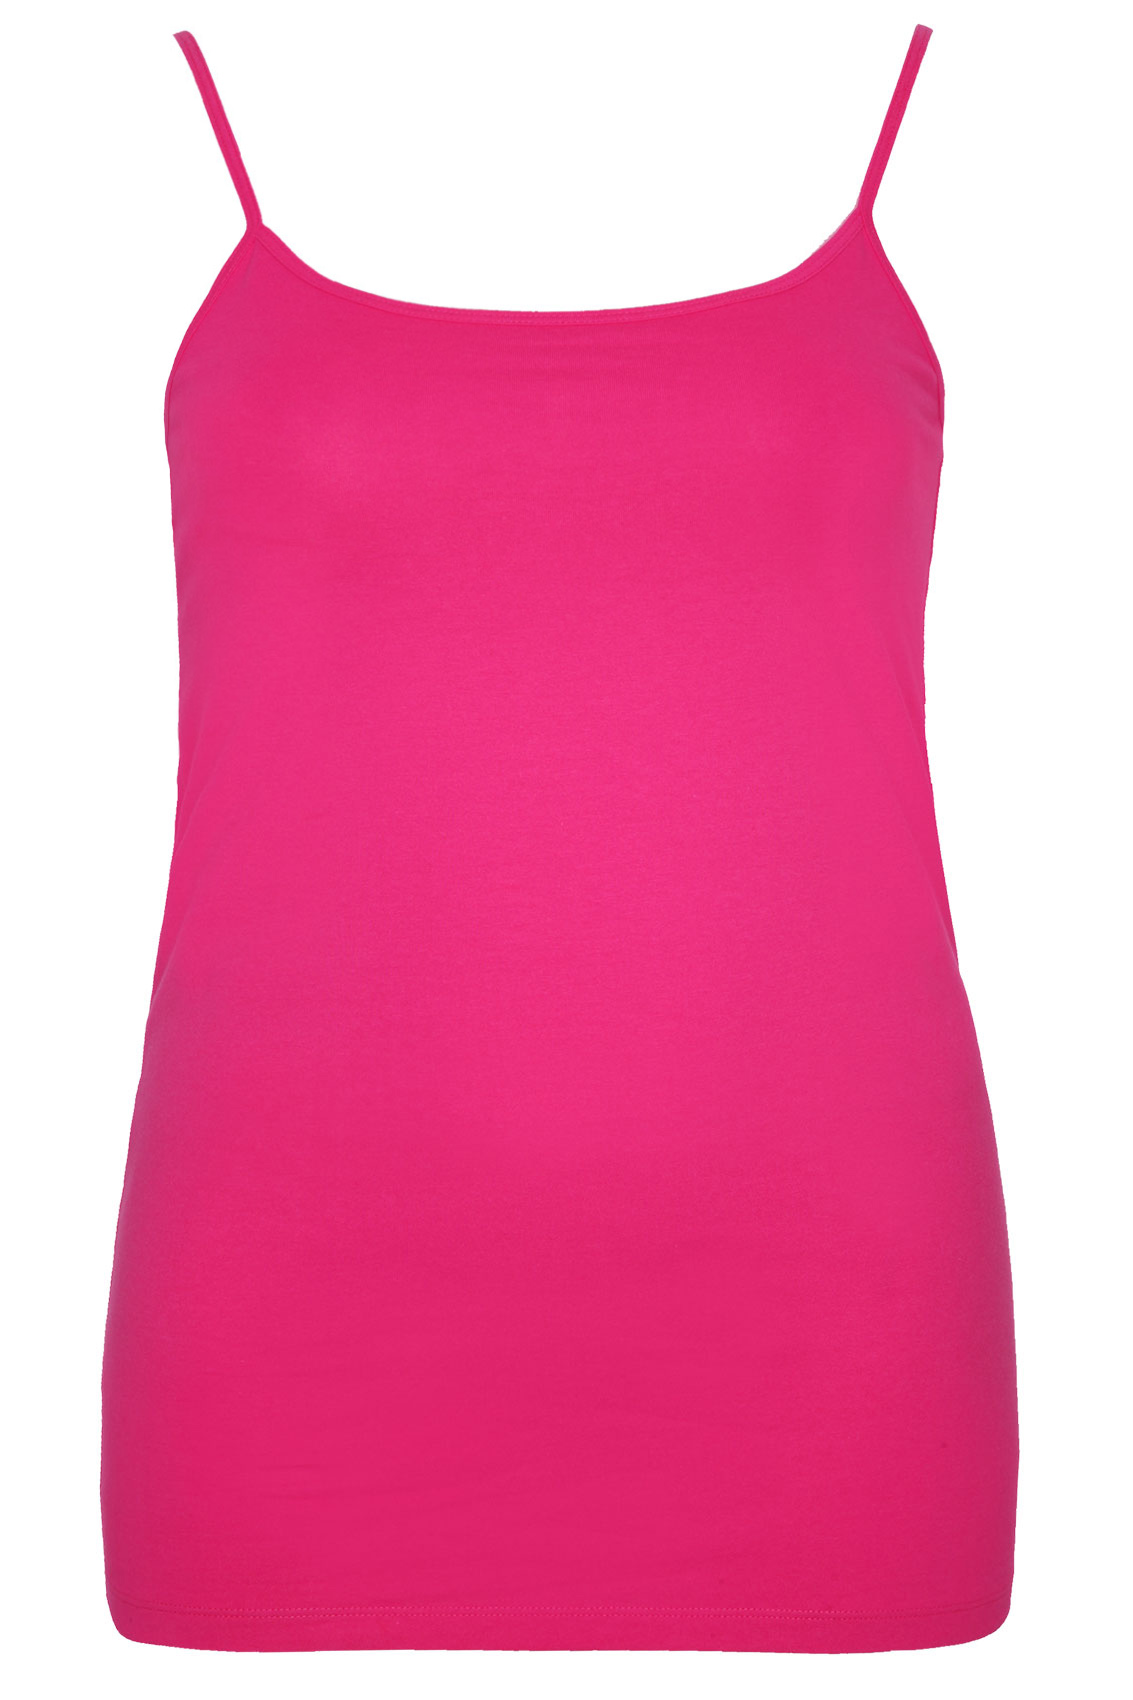 Hot Pink Longline Cotton Elastane Vest Top With Adjustable Straps plus ...